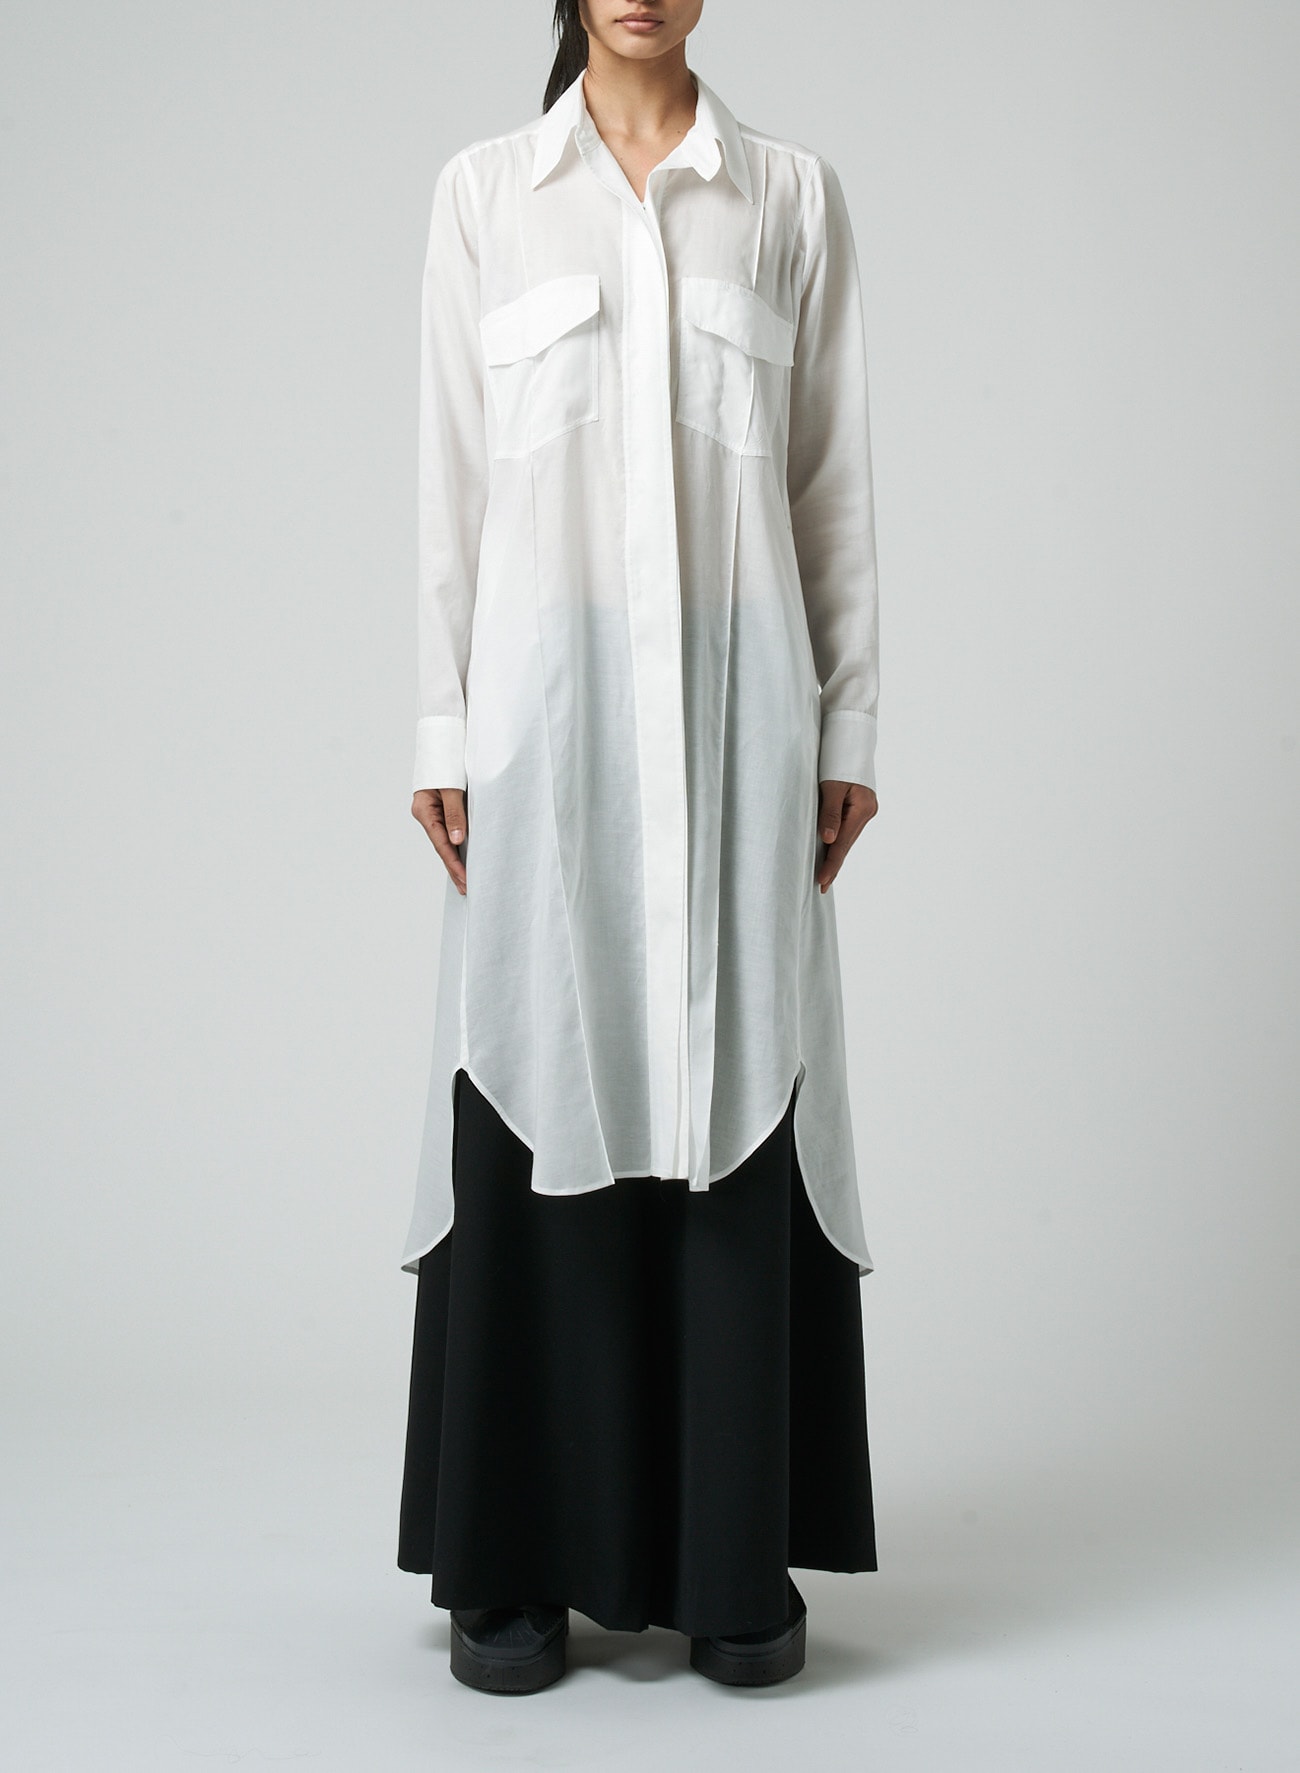 CELLULOSE LAWN WORKWEAR-STYLE LONG SHIRT DRESS(XS White): Vintage 